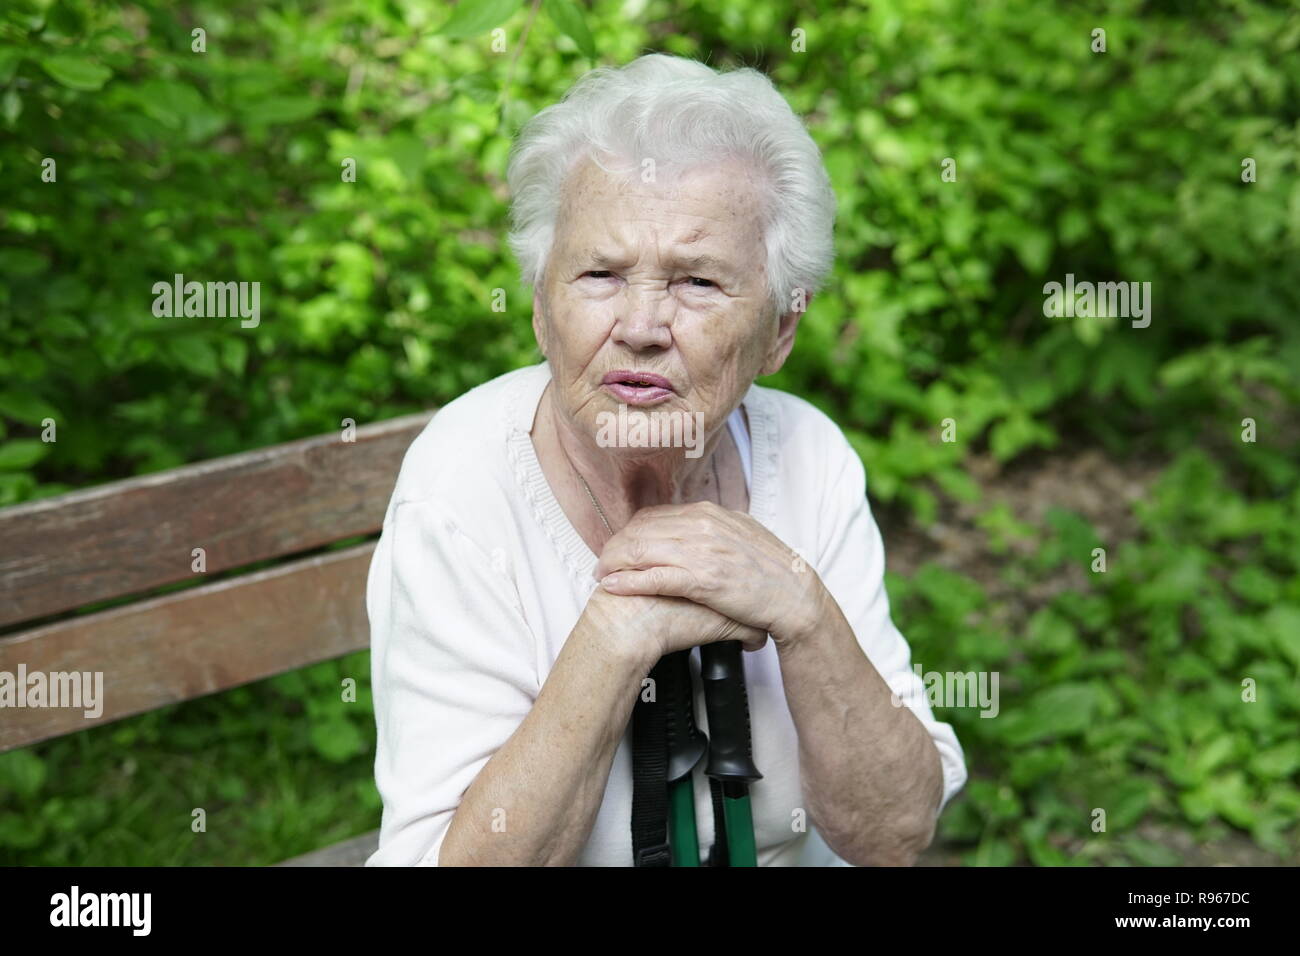 Old Granny Fotos Und Bildmaterial In Hoher Auflösung – Alamy